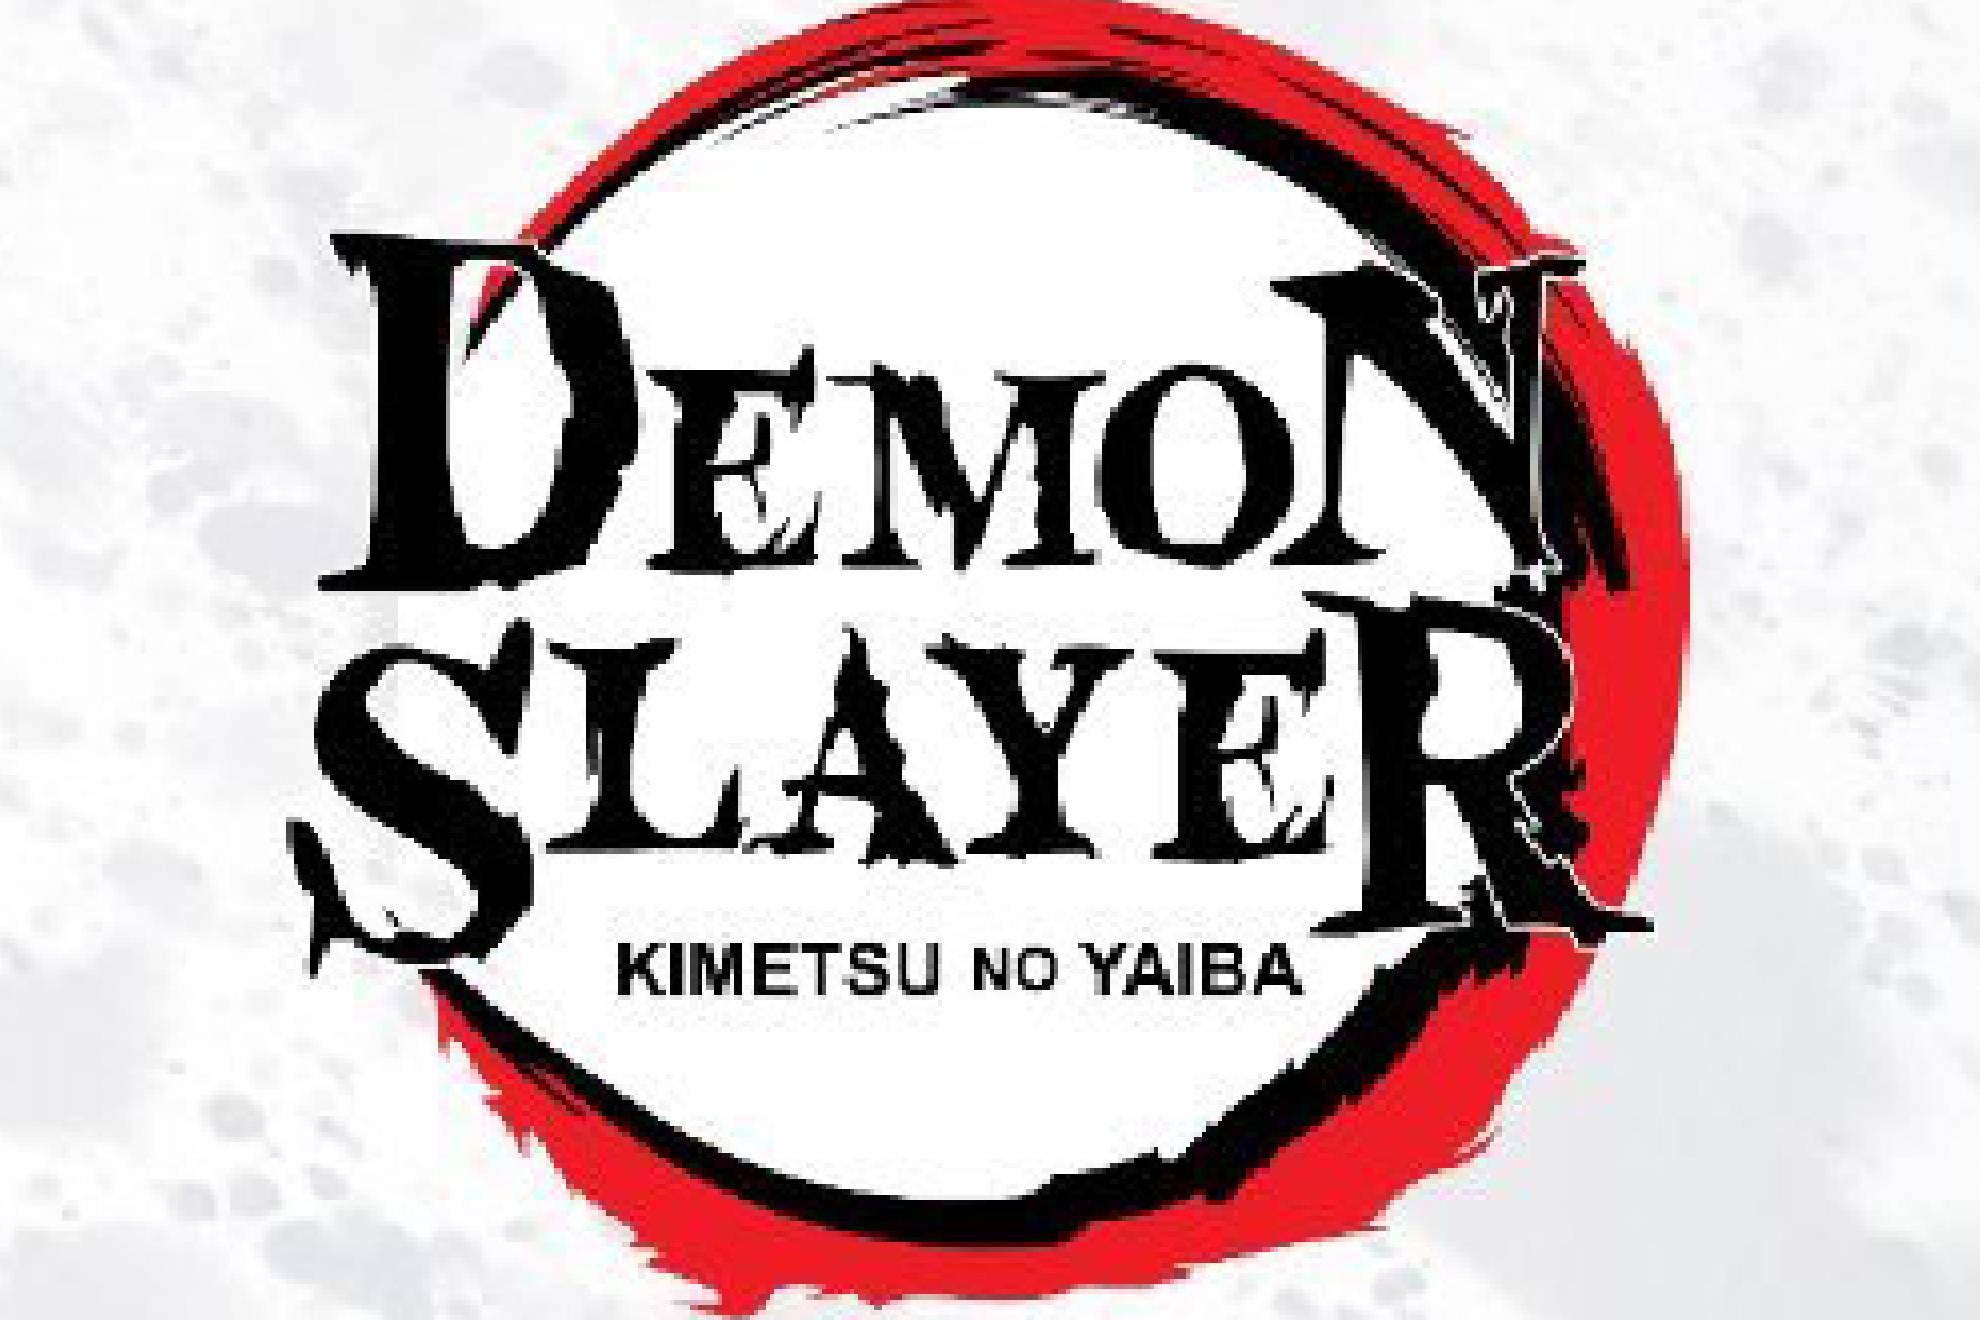 Kimetsu no Yaiba // Demon Slayer temporada 3 capitulo 1 en español